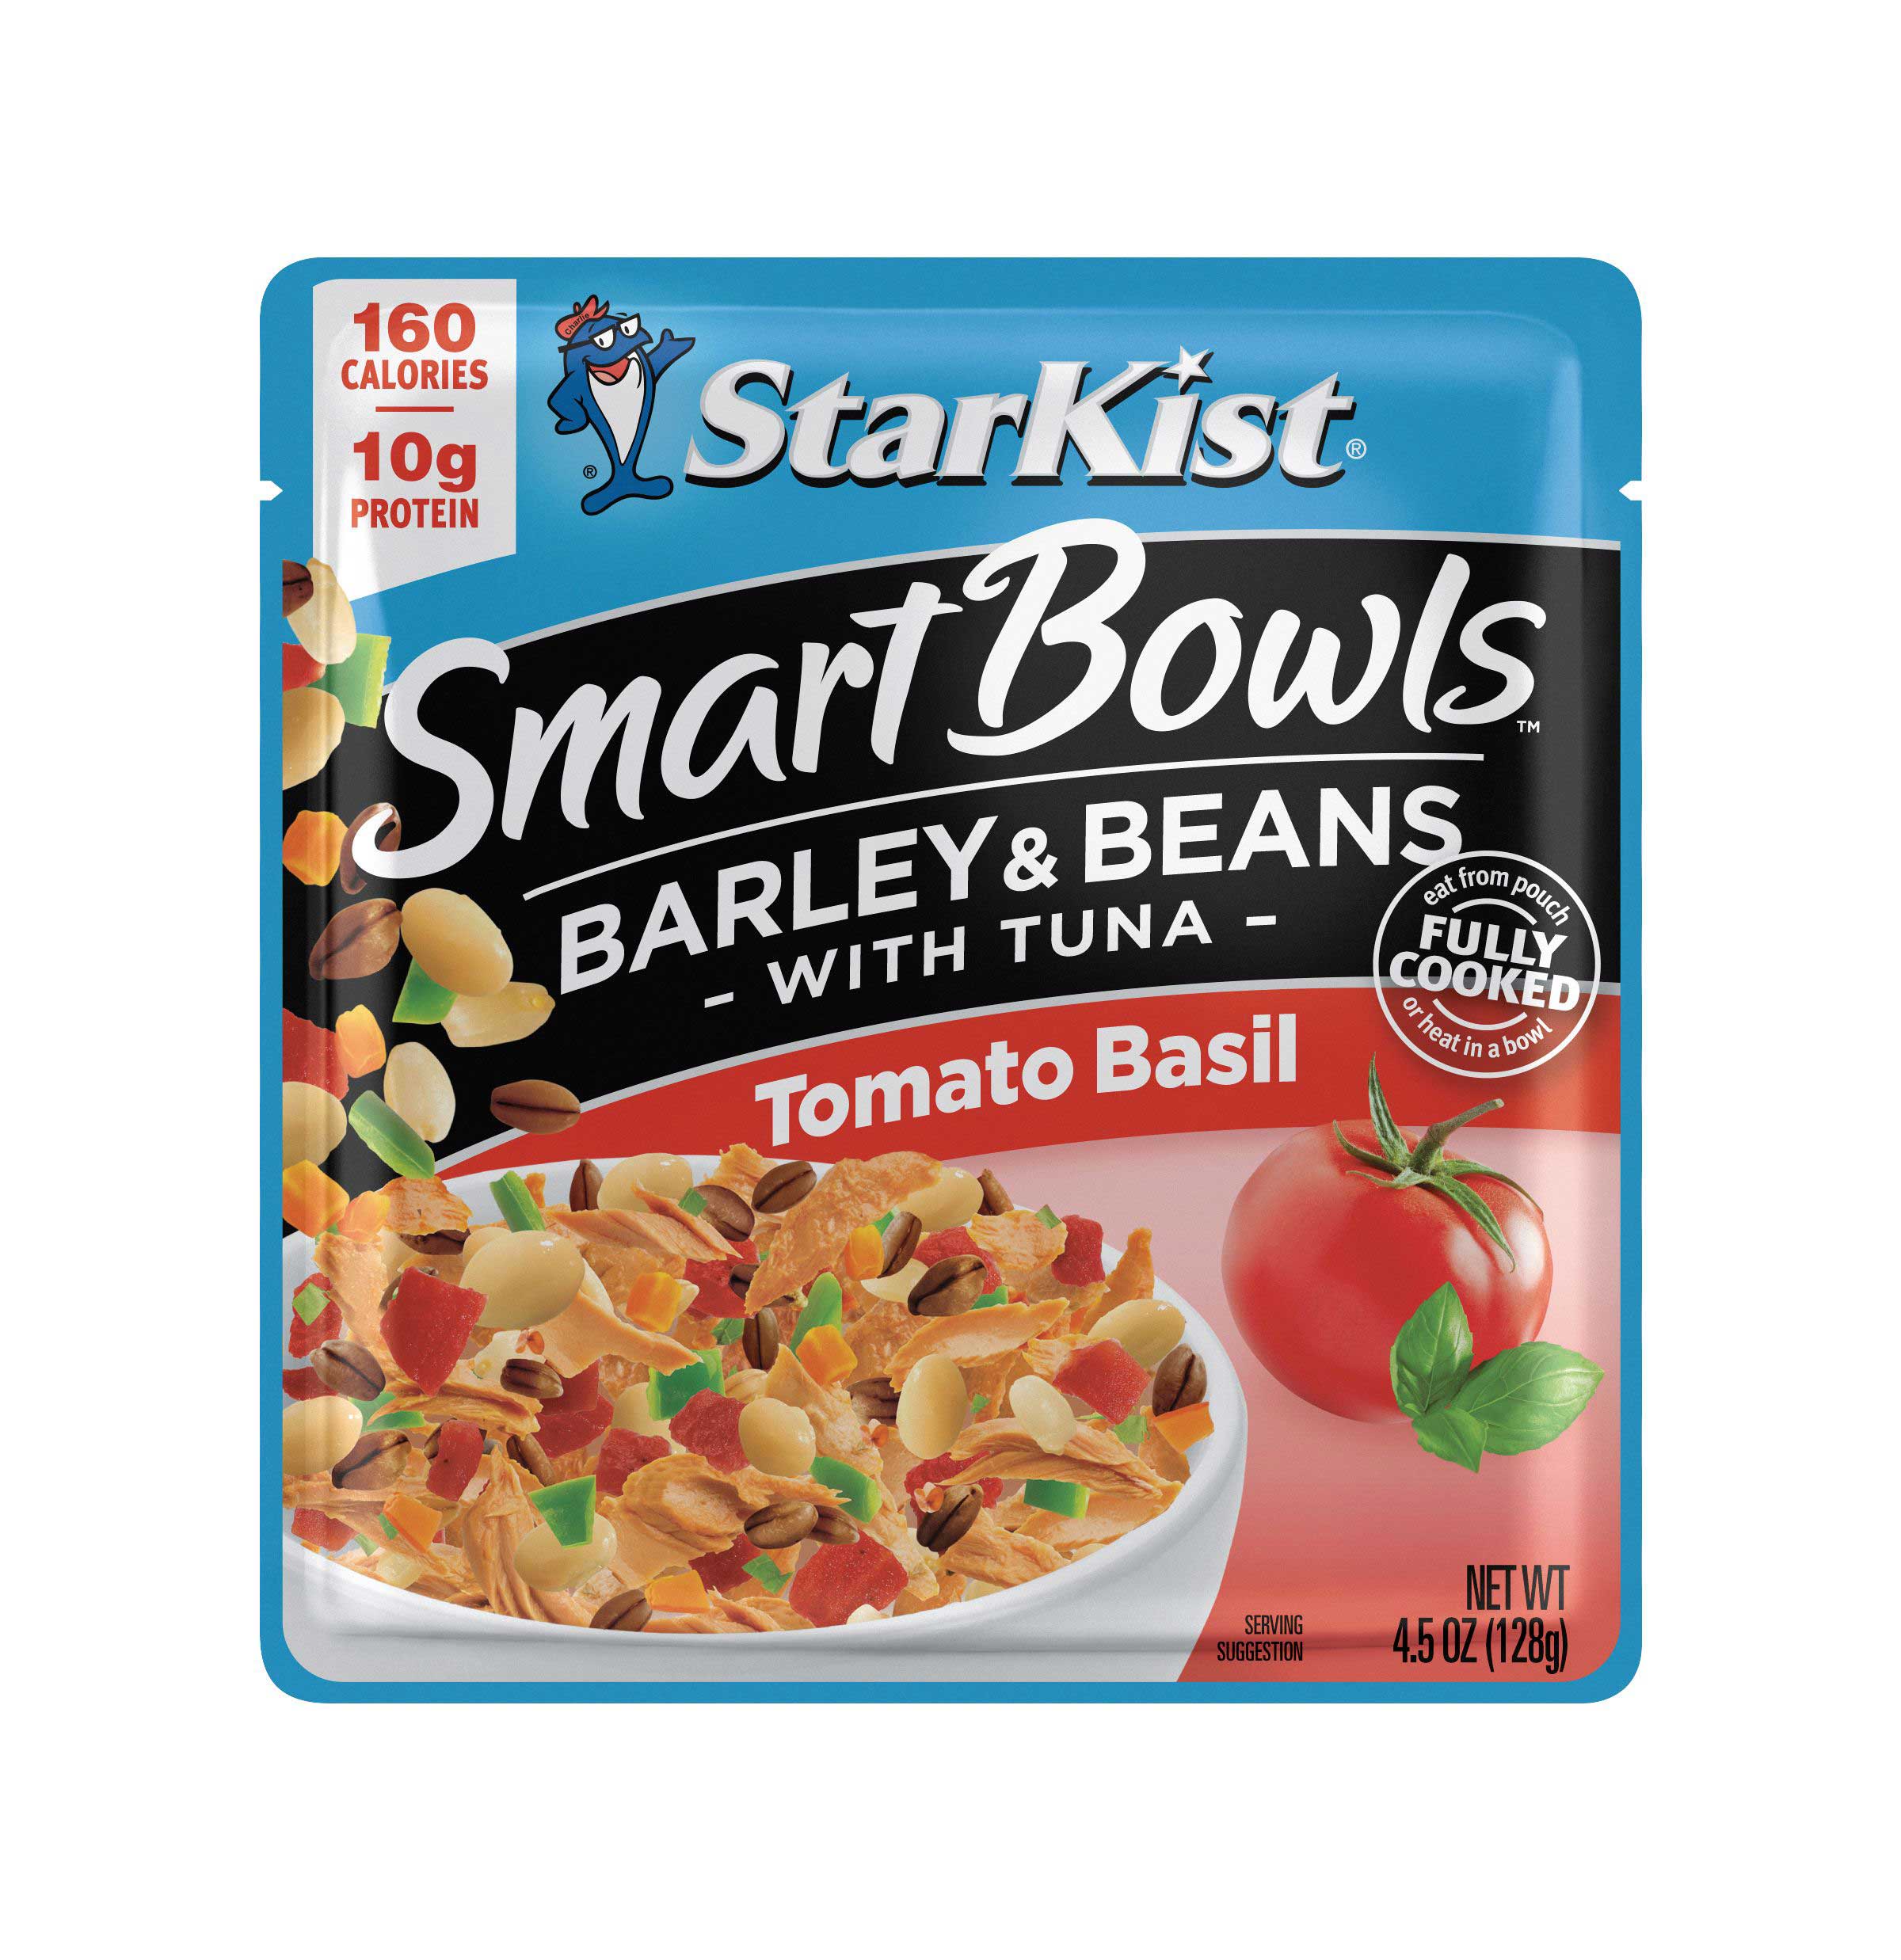 Starkist Smart Bowls Tuna - Barley & Beans Tomato Basil, 4.5 Ounce -- 12 per case